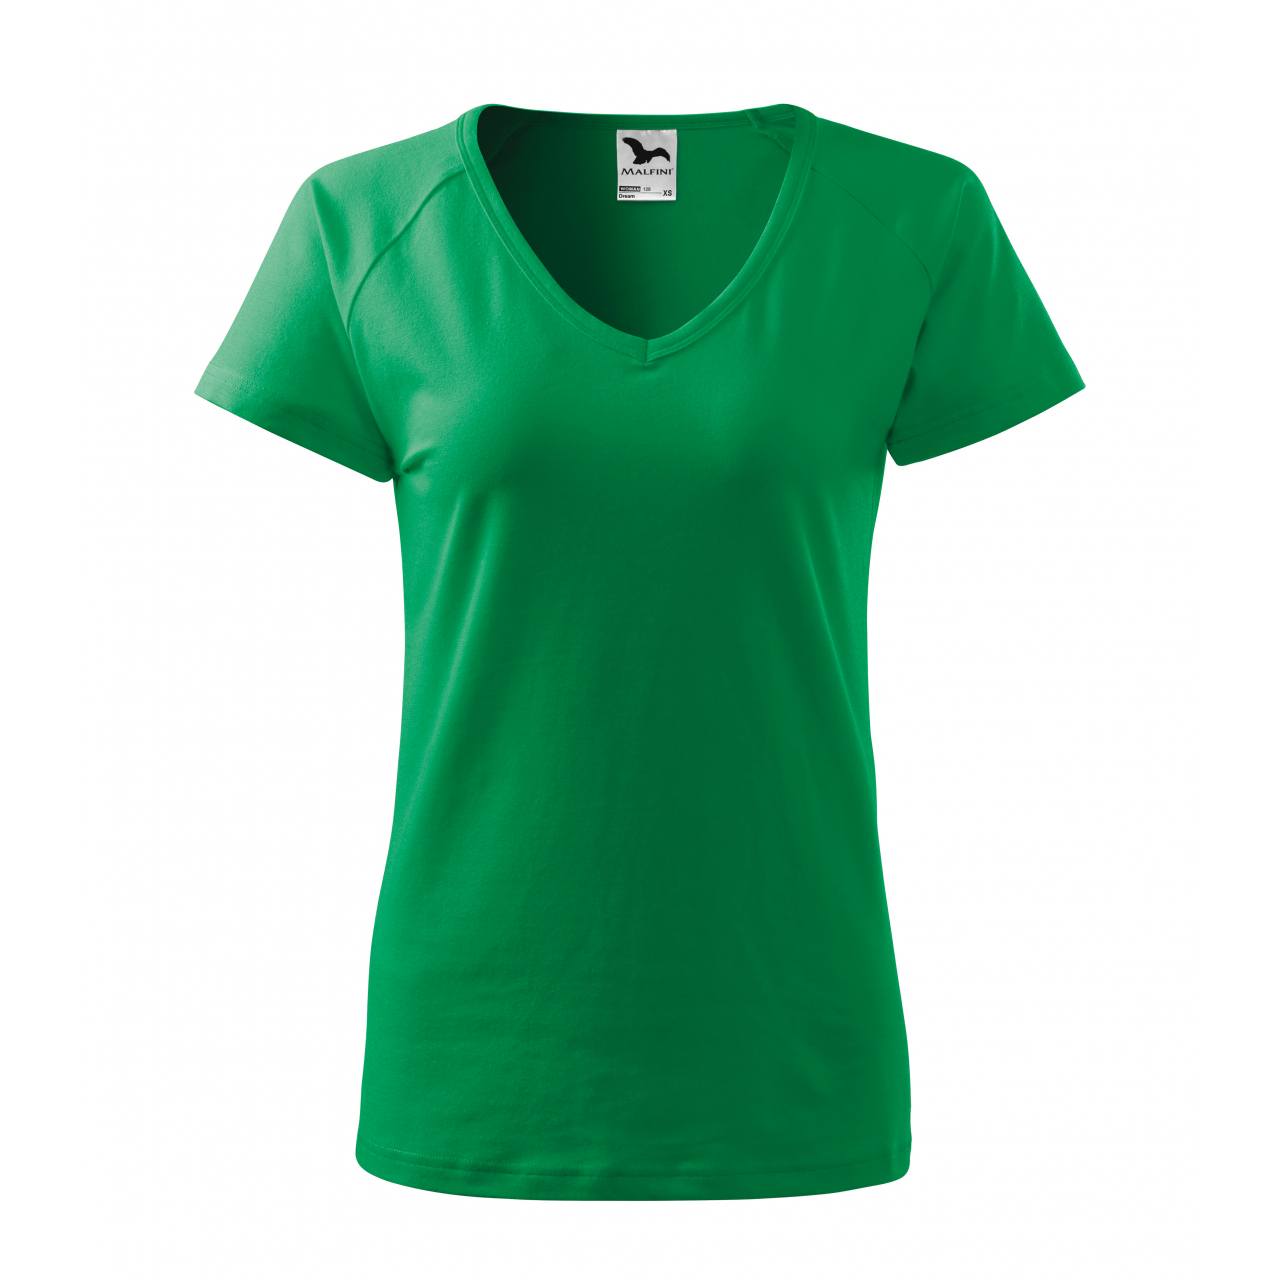 Triko dámské Malfini Dream - zelené, XL